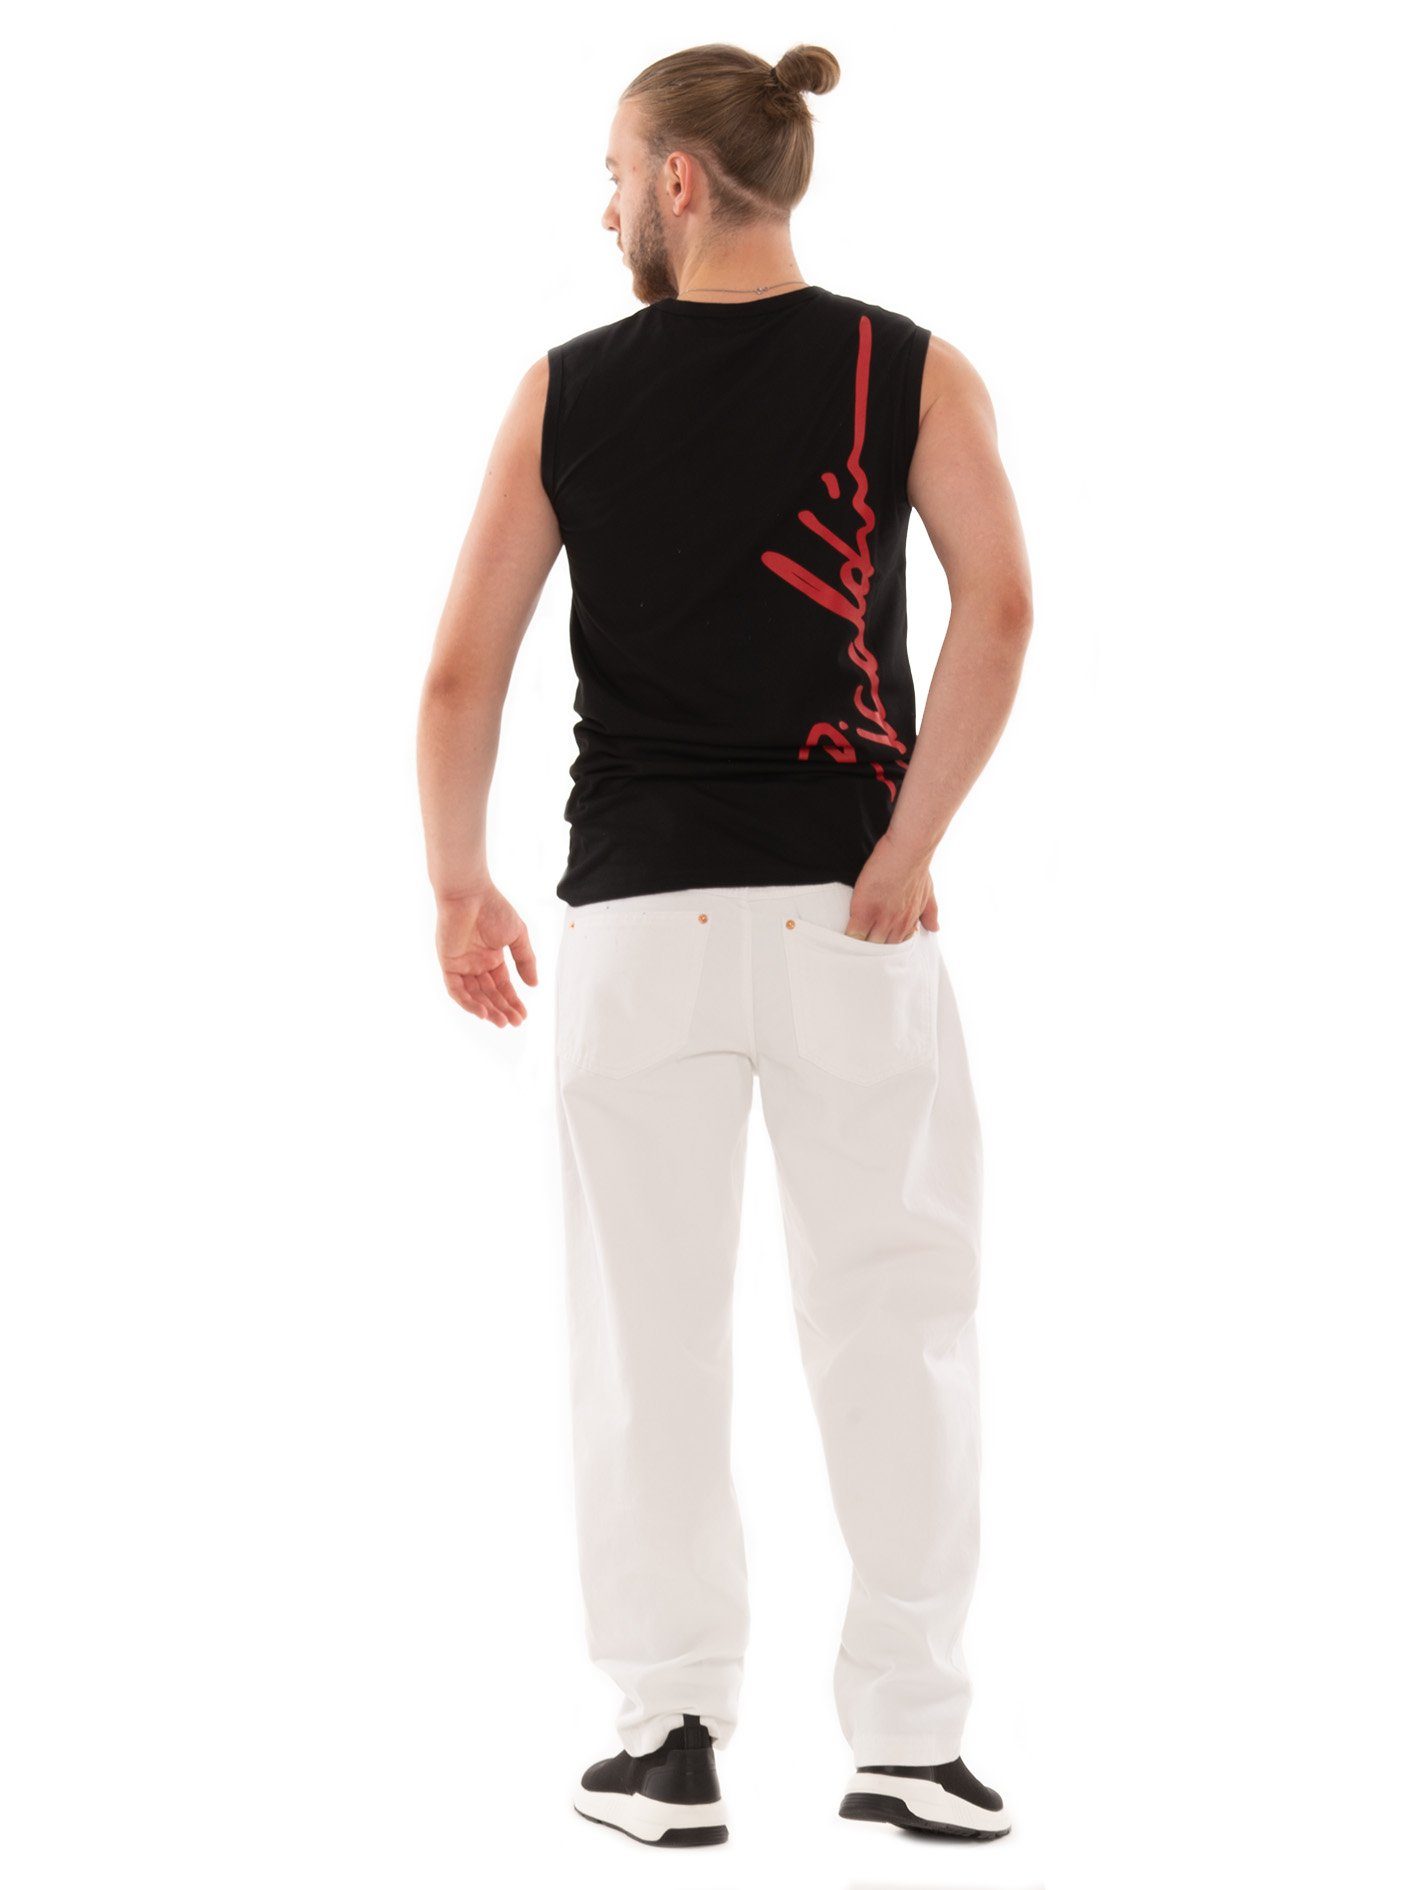 PICALDI Jeans Tank Muskelshirt Black Top Sommermode, Streetwear Male